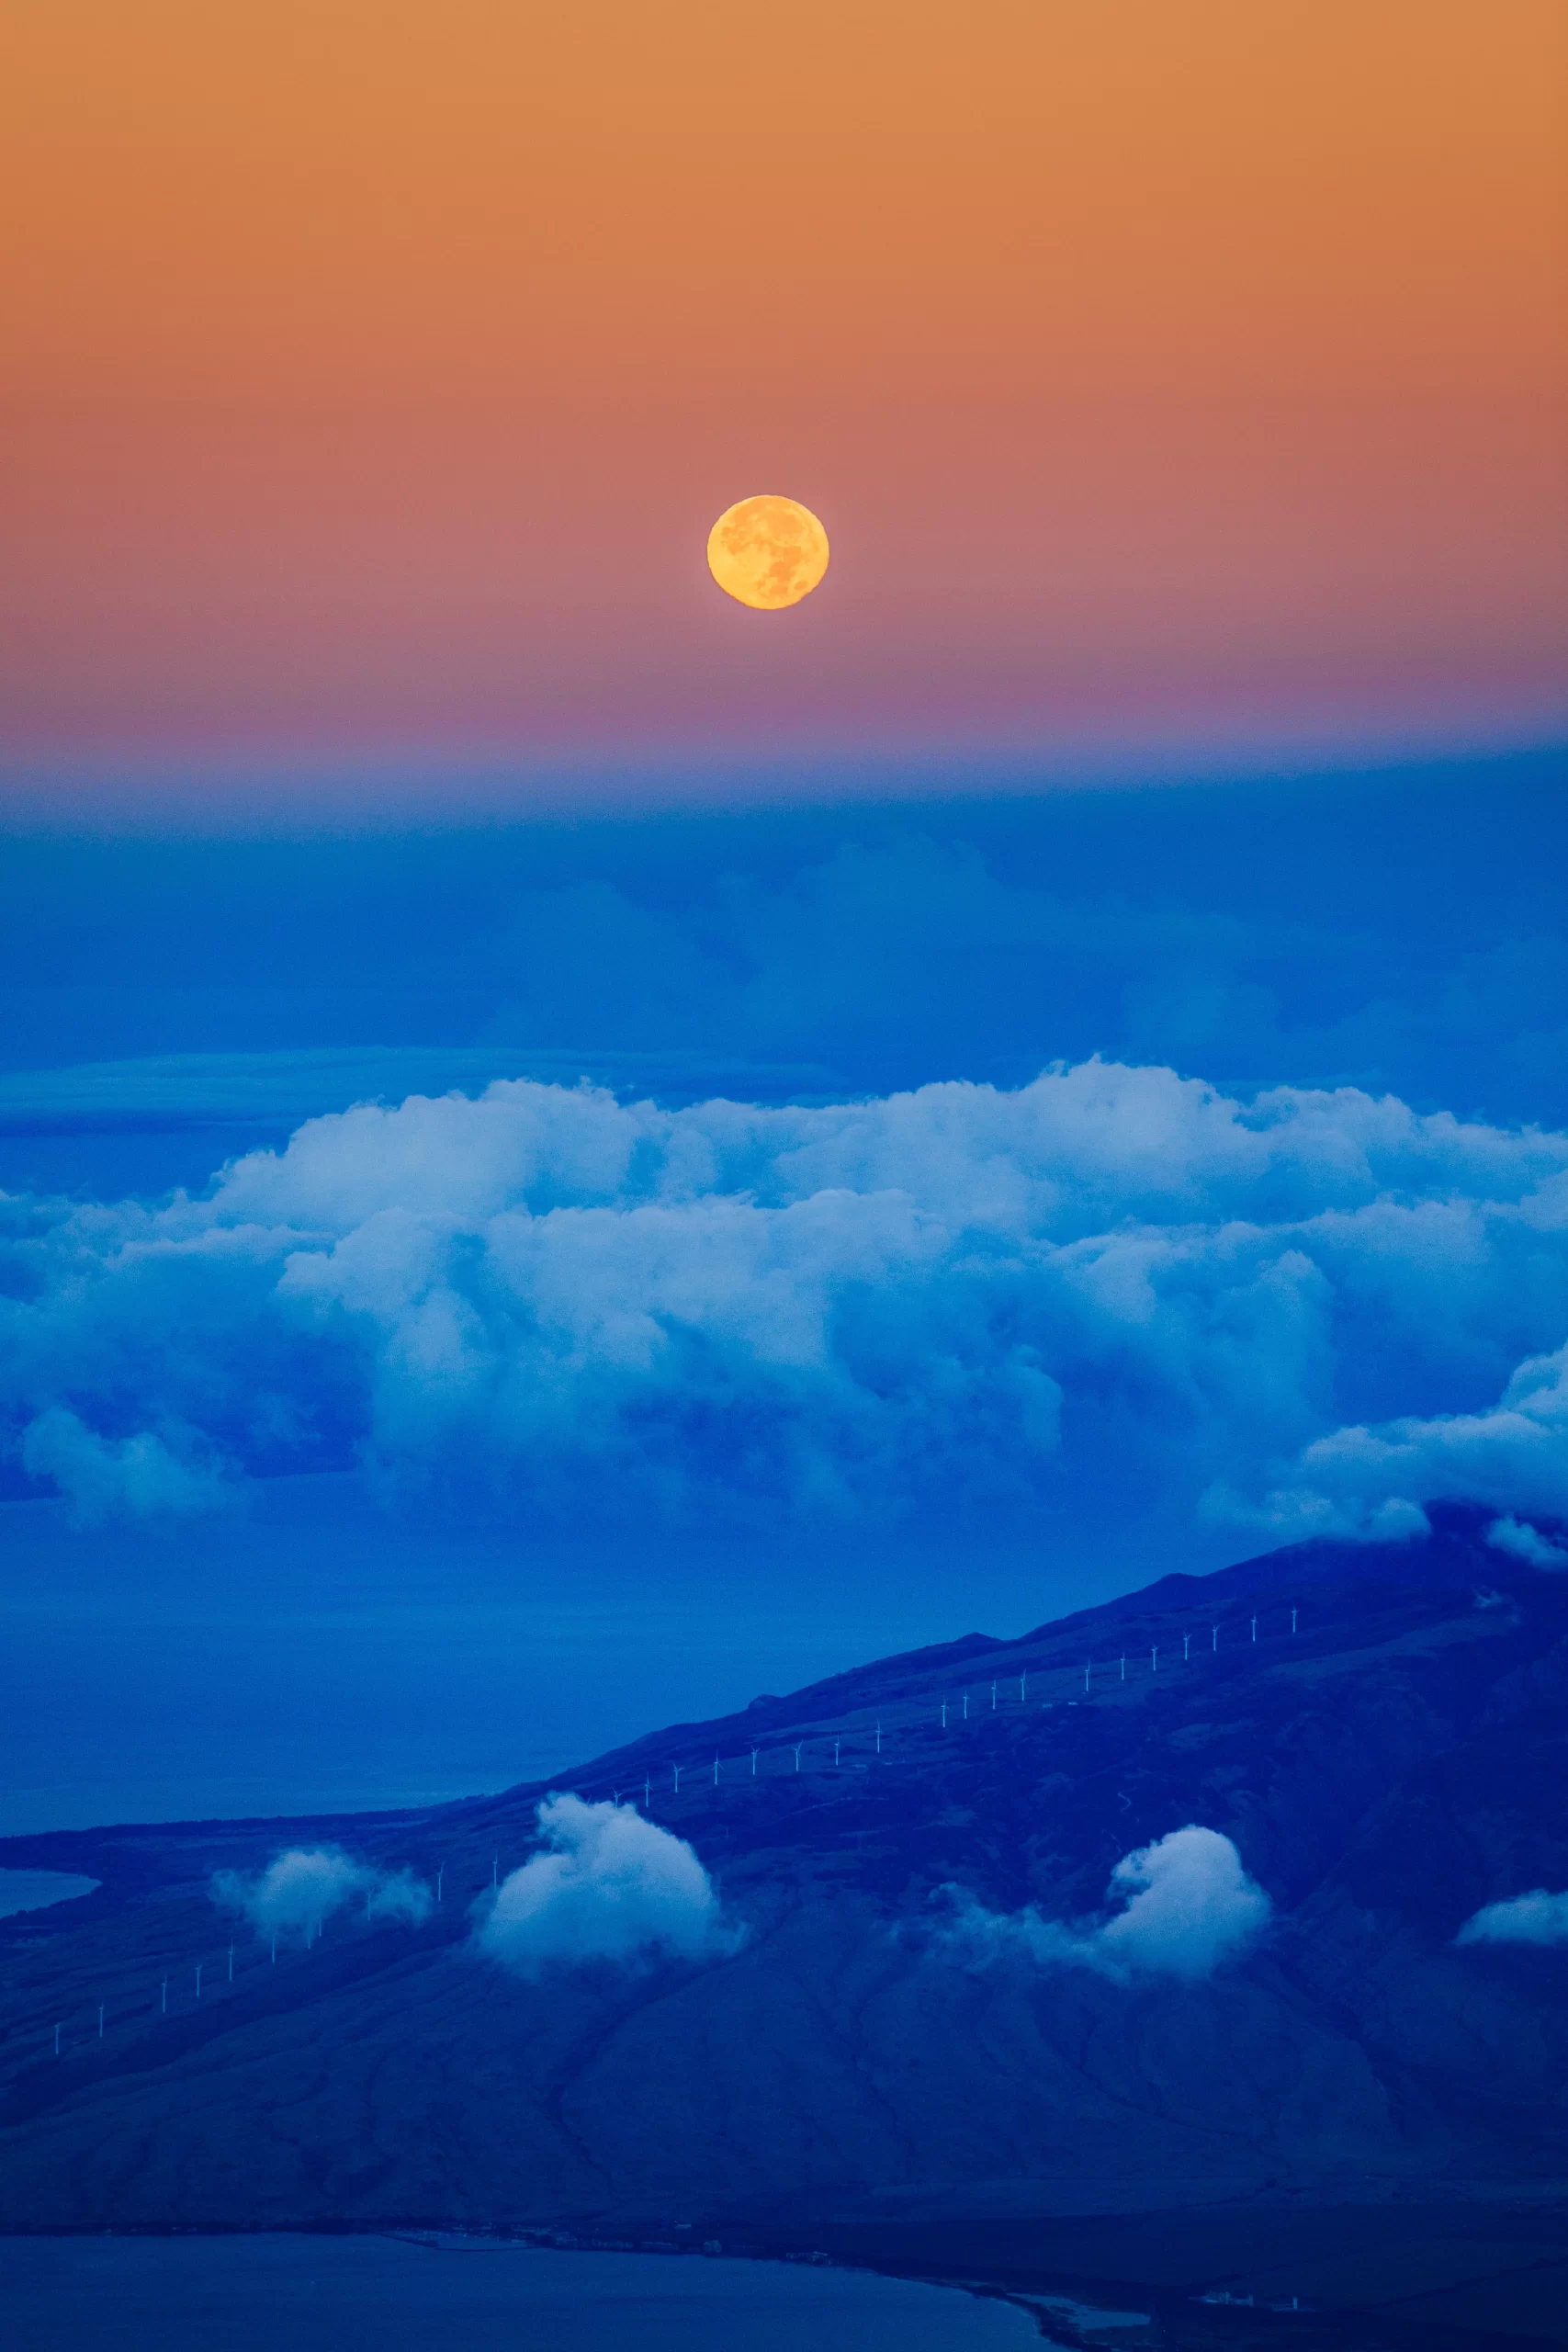 Haleakala Summit Parking, United States<br />
Published on June 5, 2016<br />
Canon, EOS 5D Mark III<br />
Free to use under the Unsplash License<br />
Moon rise at Haleakala Summit